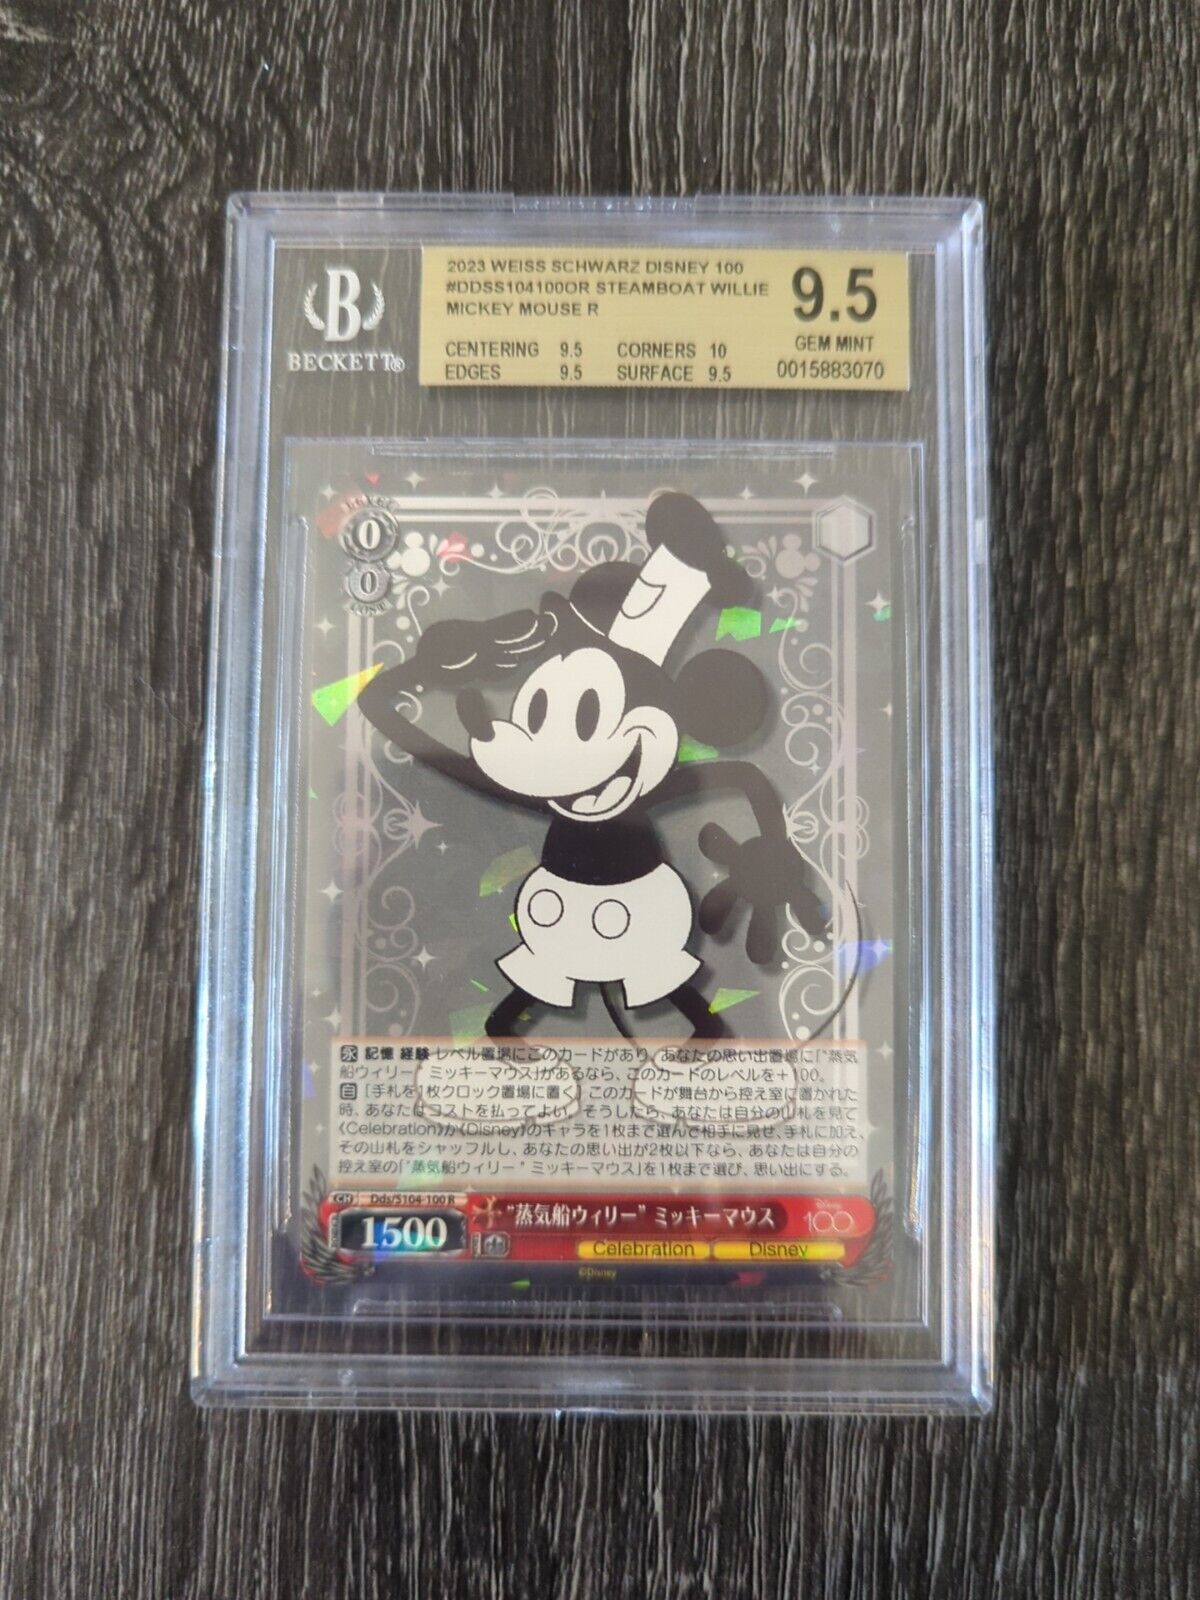 2023 Weiss Schwarz Disney 100 Steamboat Willie Mickey Mouse BGS Gem Mint 9.5